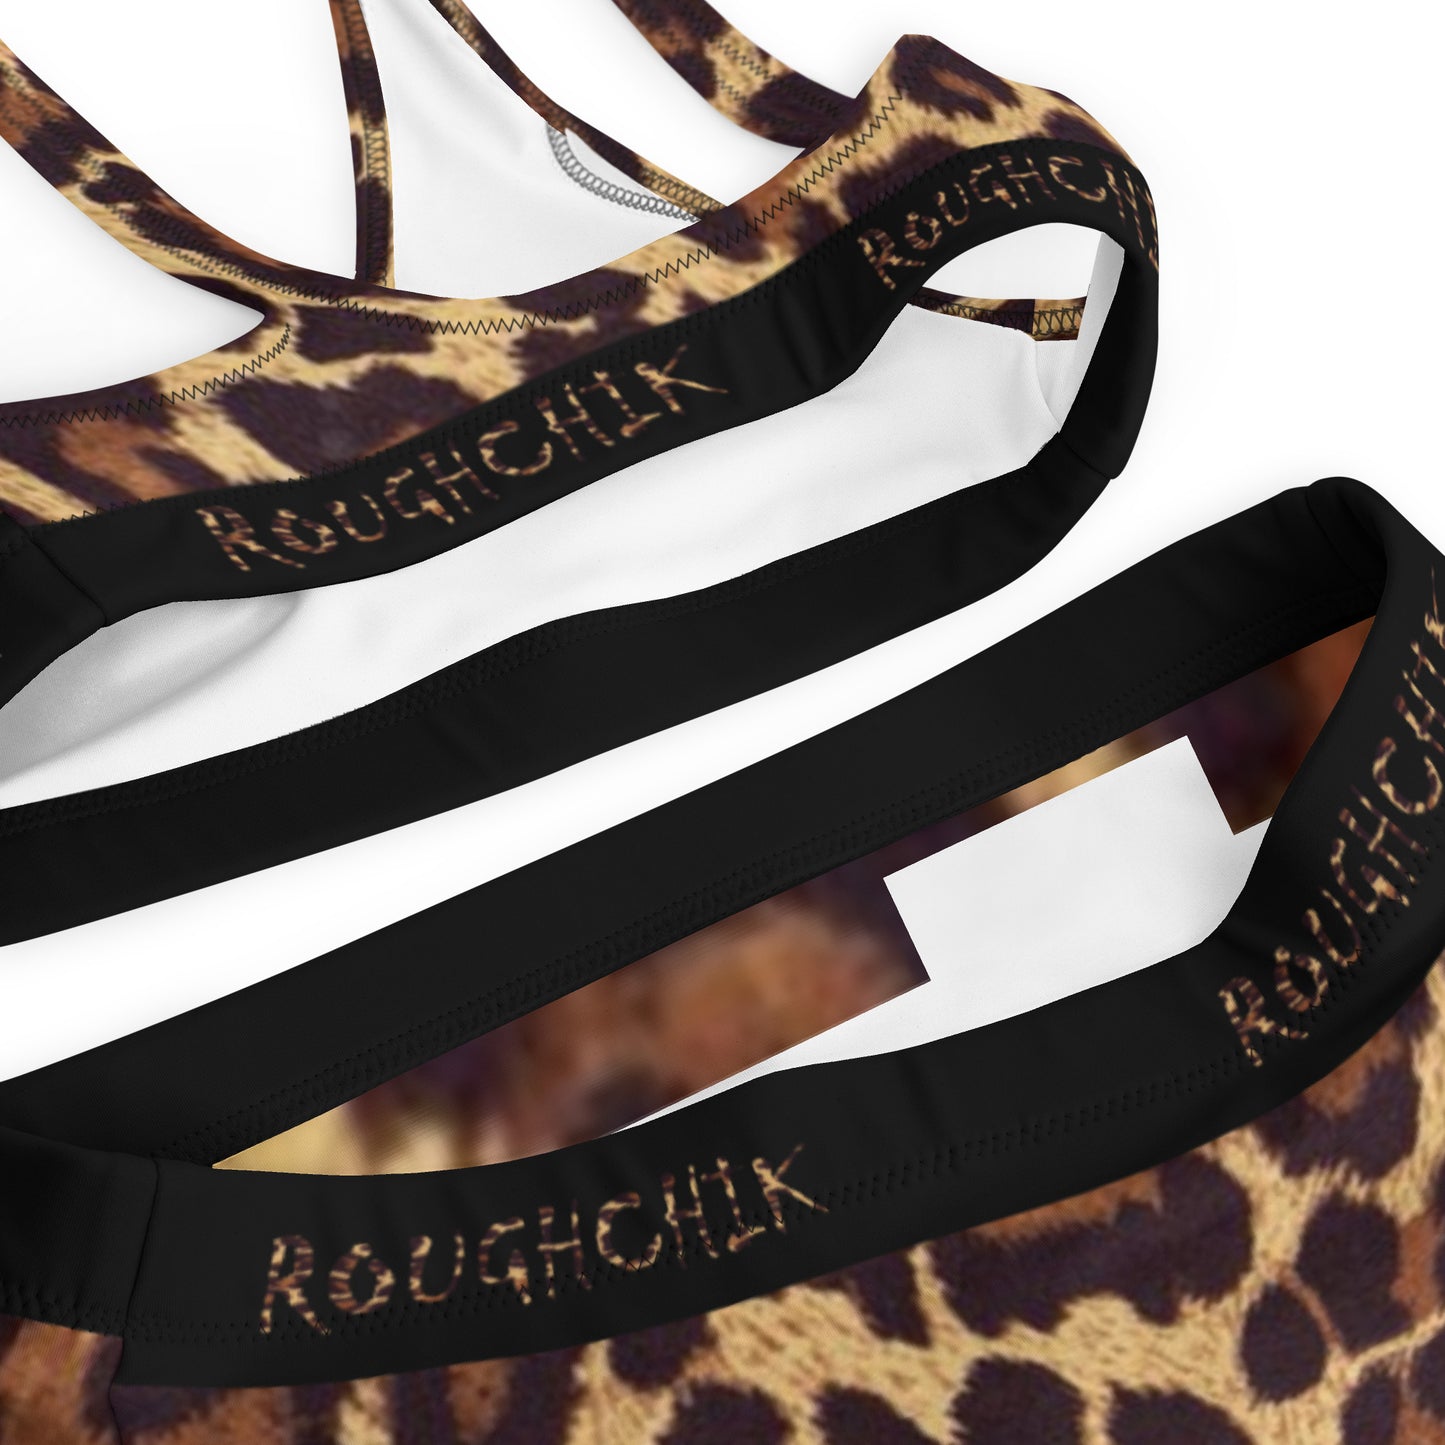 Leopard Print Recycled high-waisted bikini